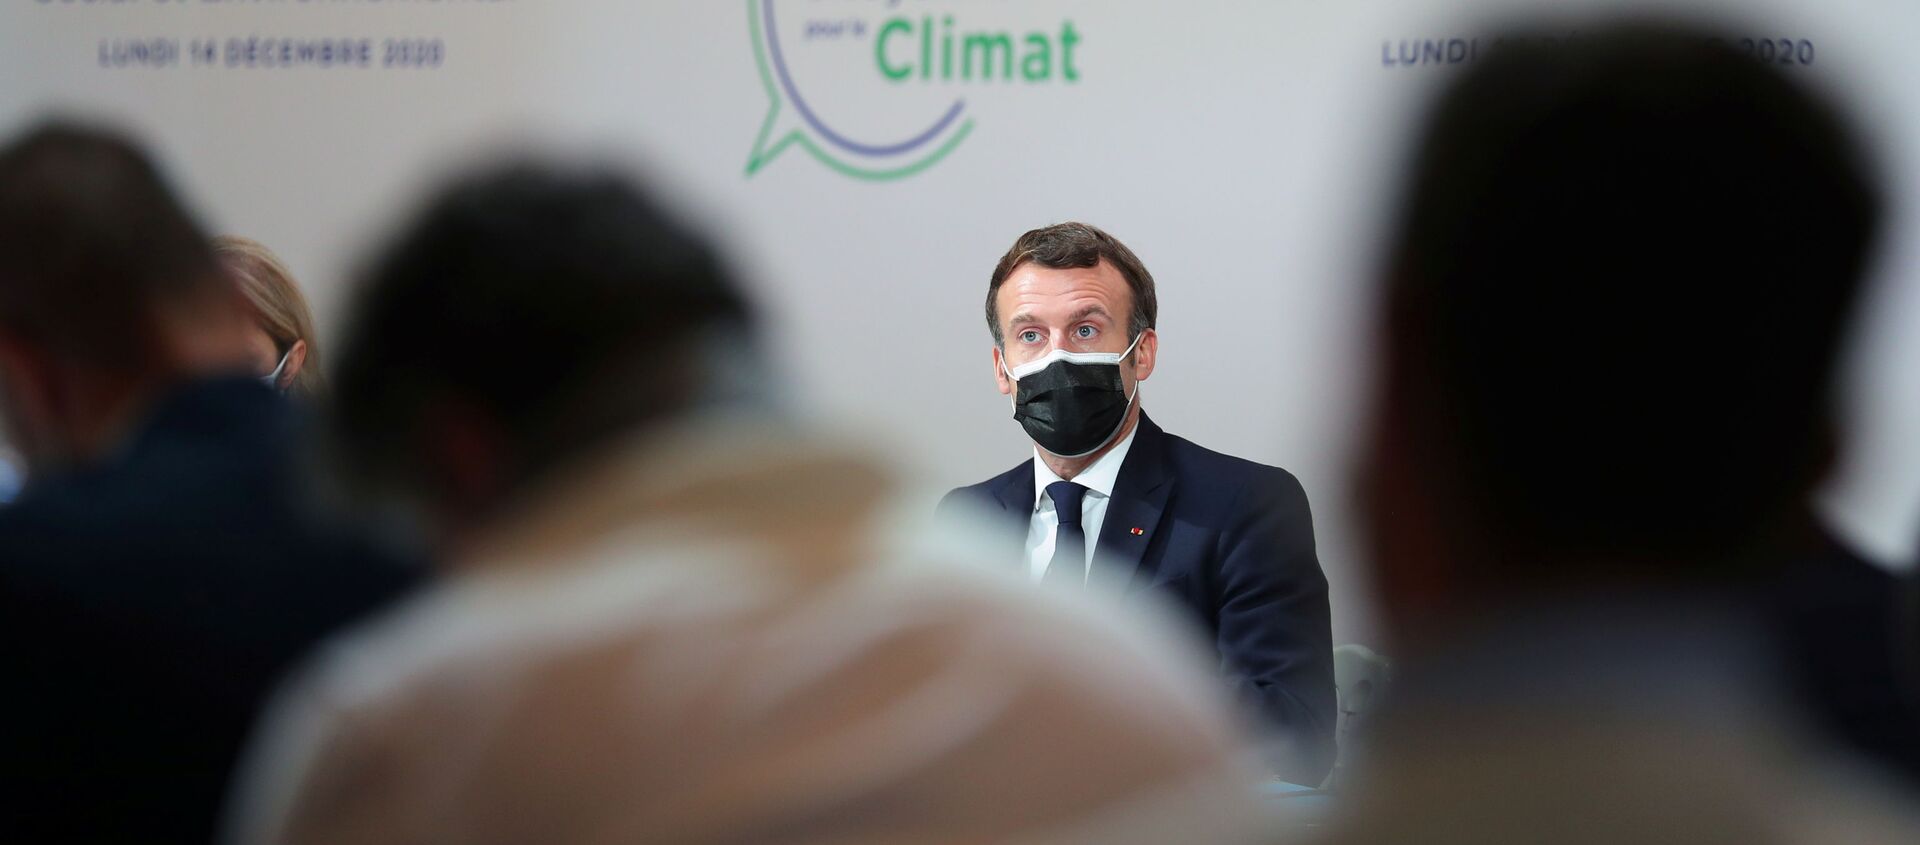 France's President Emmanuel Macron delivers a speech during a Citizens' Convention on Climate, in Paris, France 14 December 2020. - Sputnik International, 1920, 15.12.2020